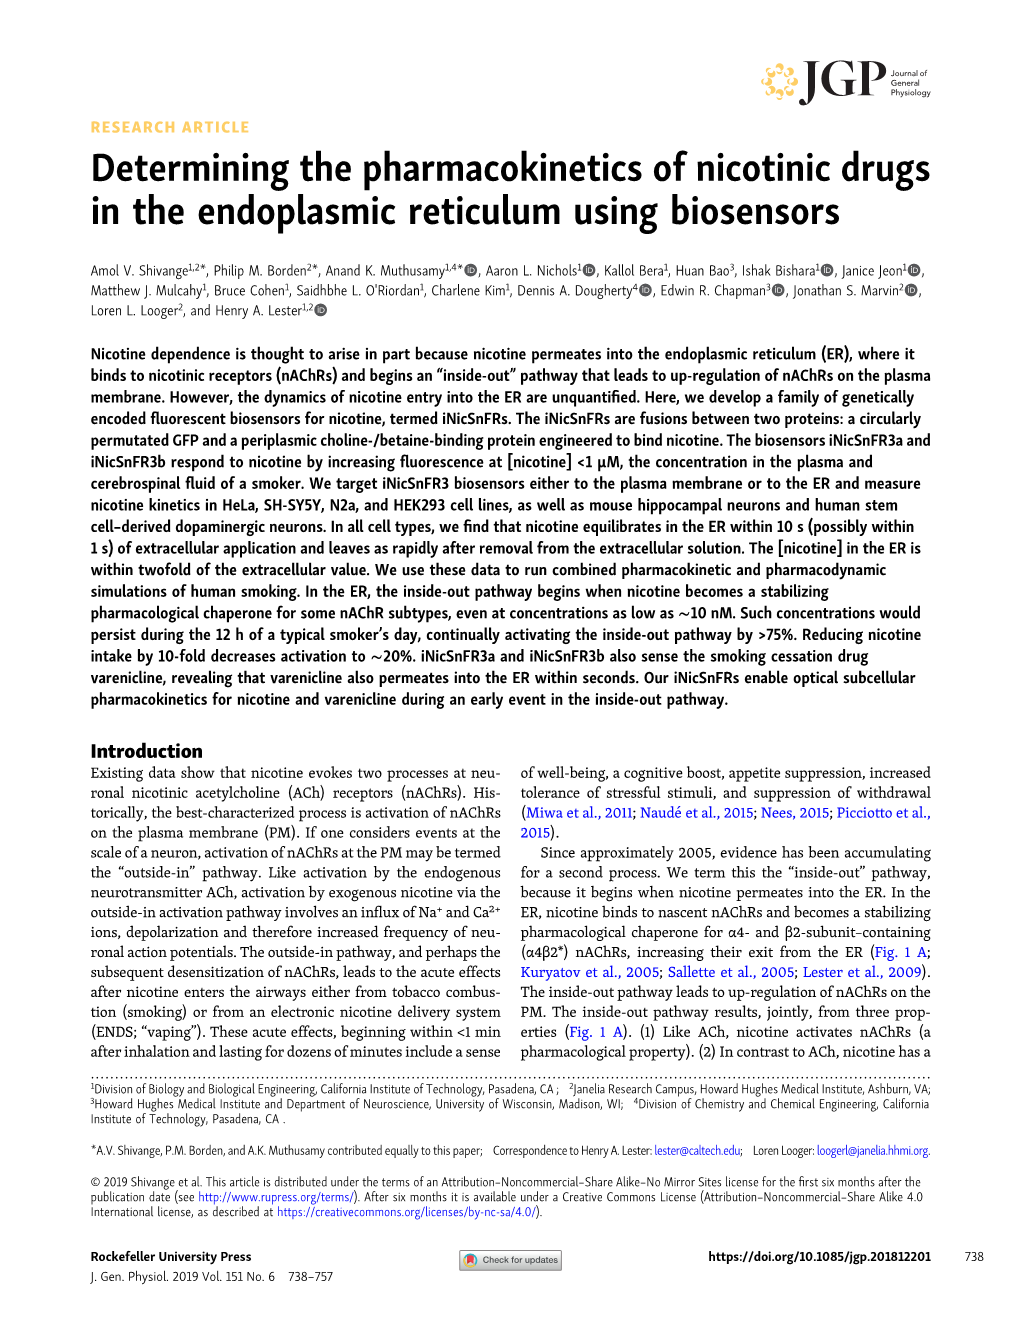 Determining the Pharmacokinetics of Nicotinic Drugs in the Endoplasmic Reticulum Using Biosensors